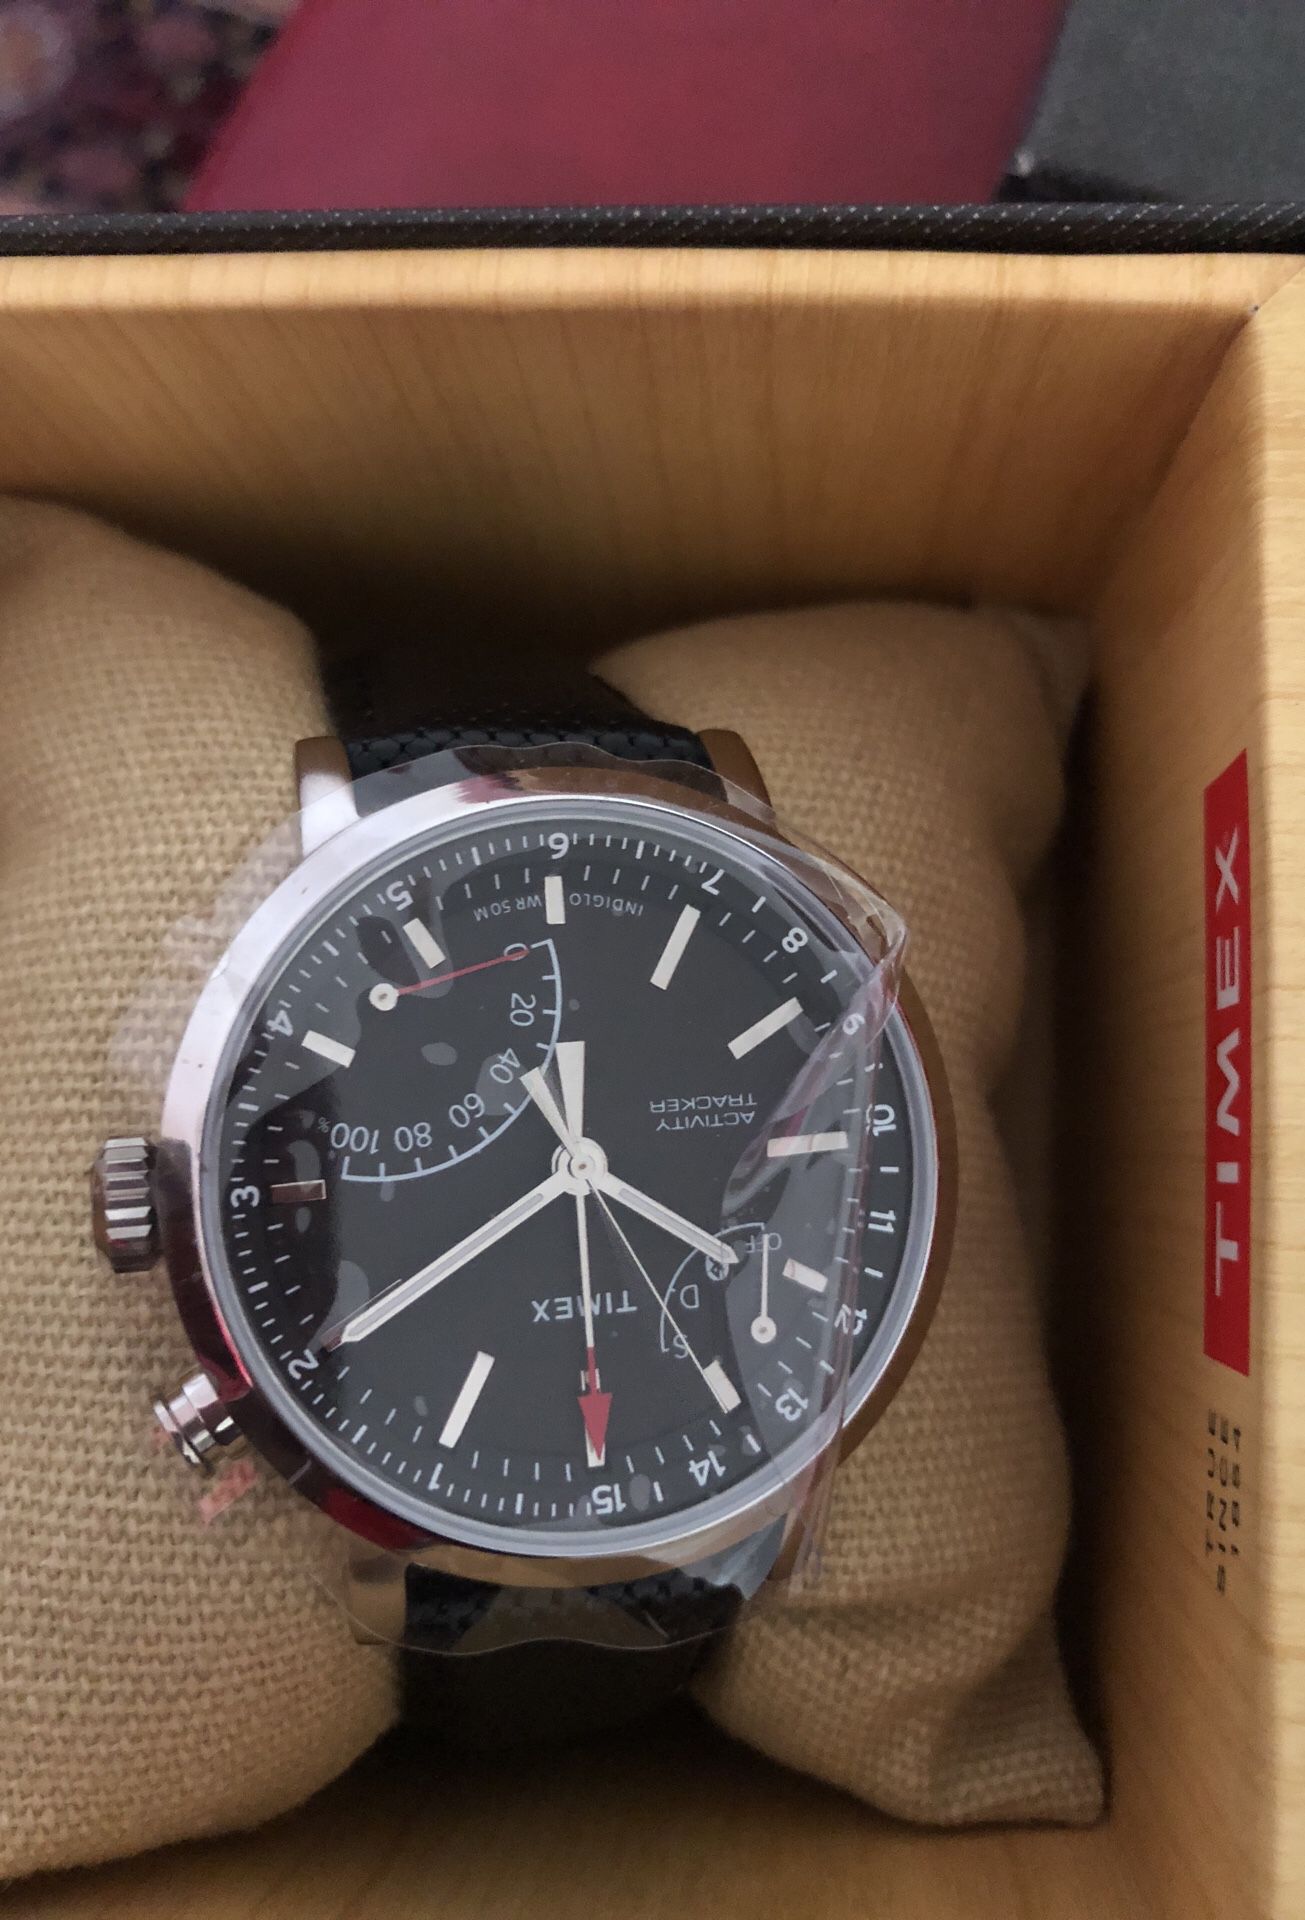 Timex metropolitan + watch.